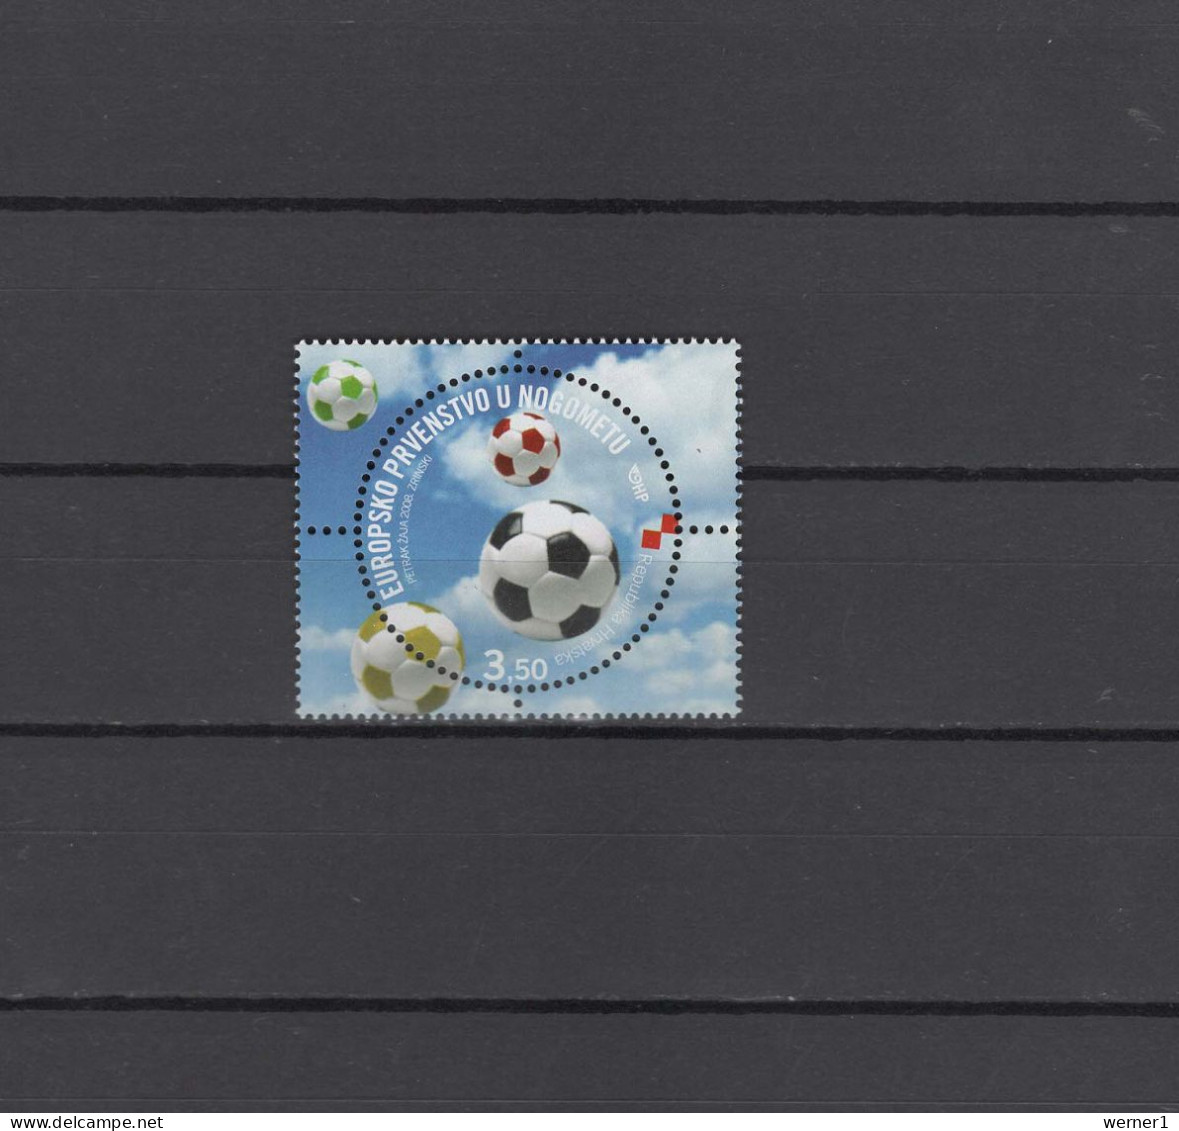 Croatia 2008 Football Soccer European Championship Stamp MNH - Eurocopa (UEFA)